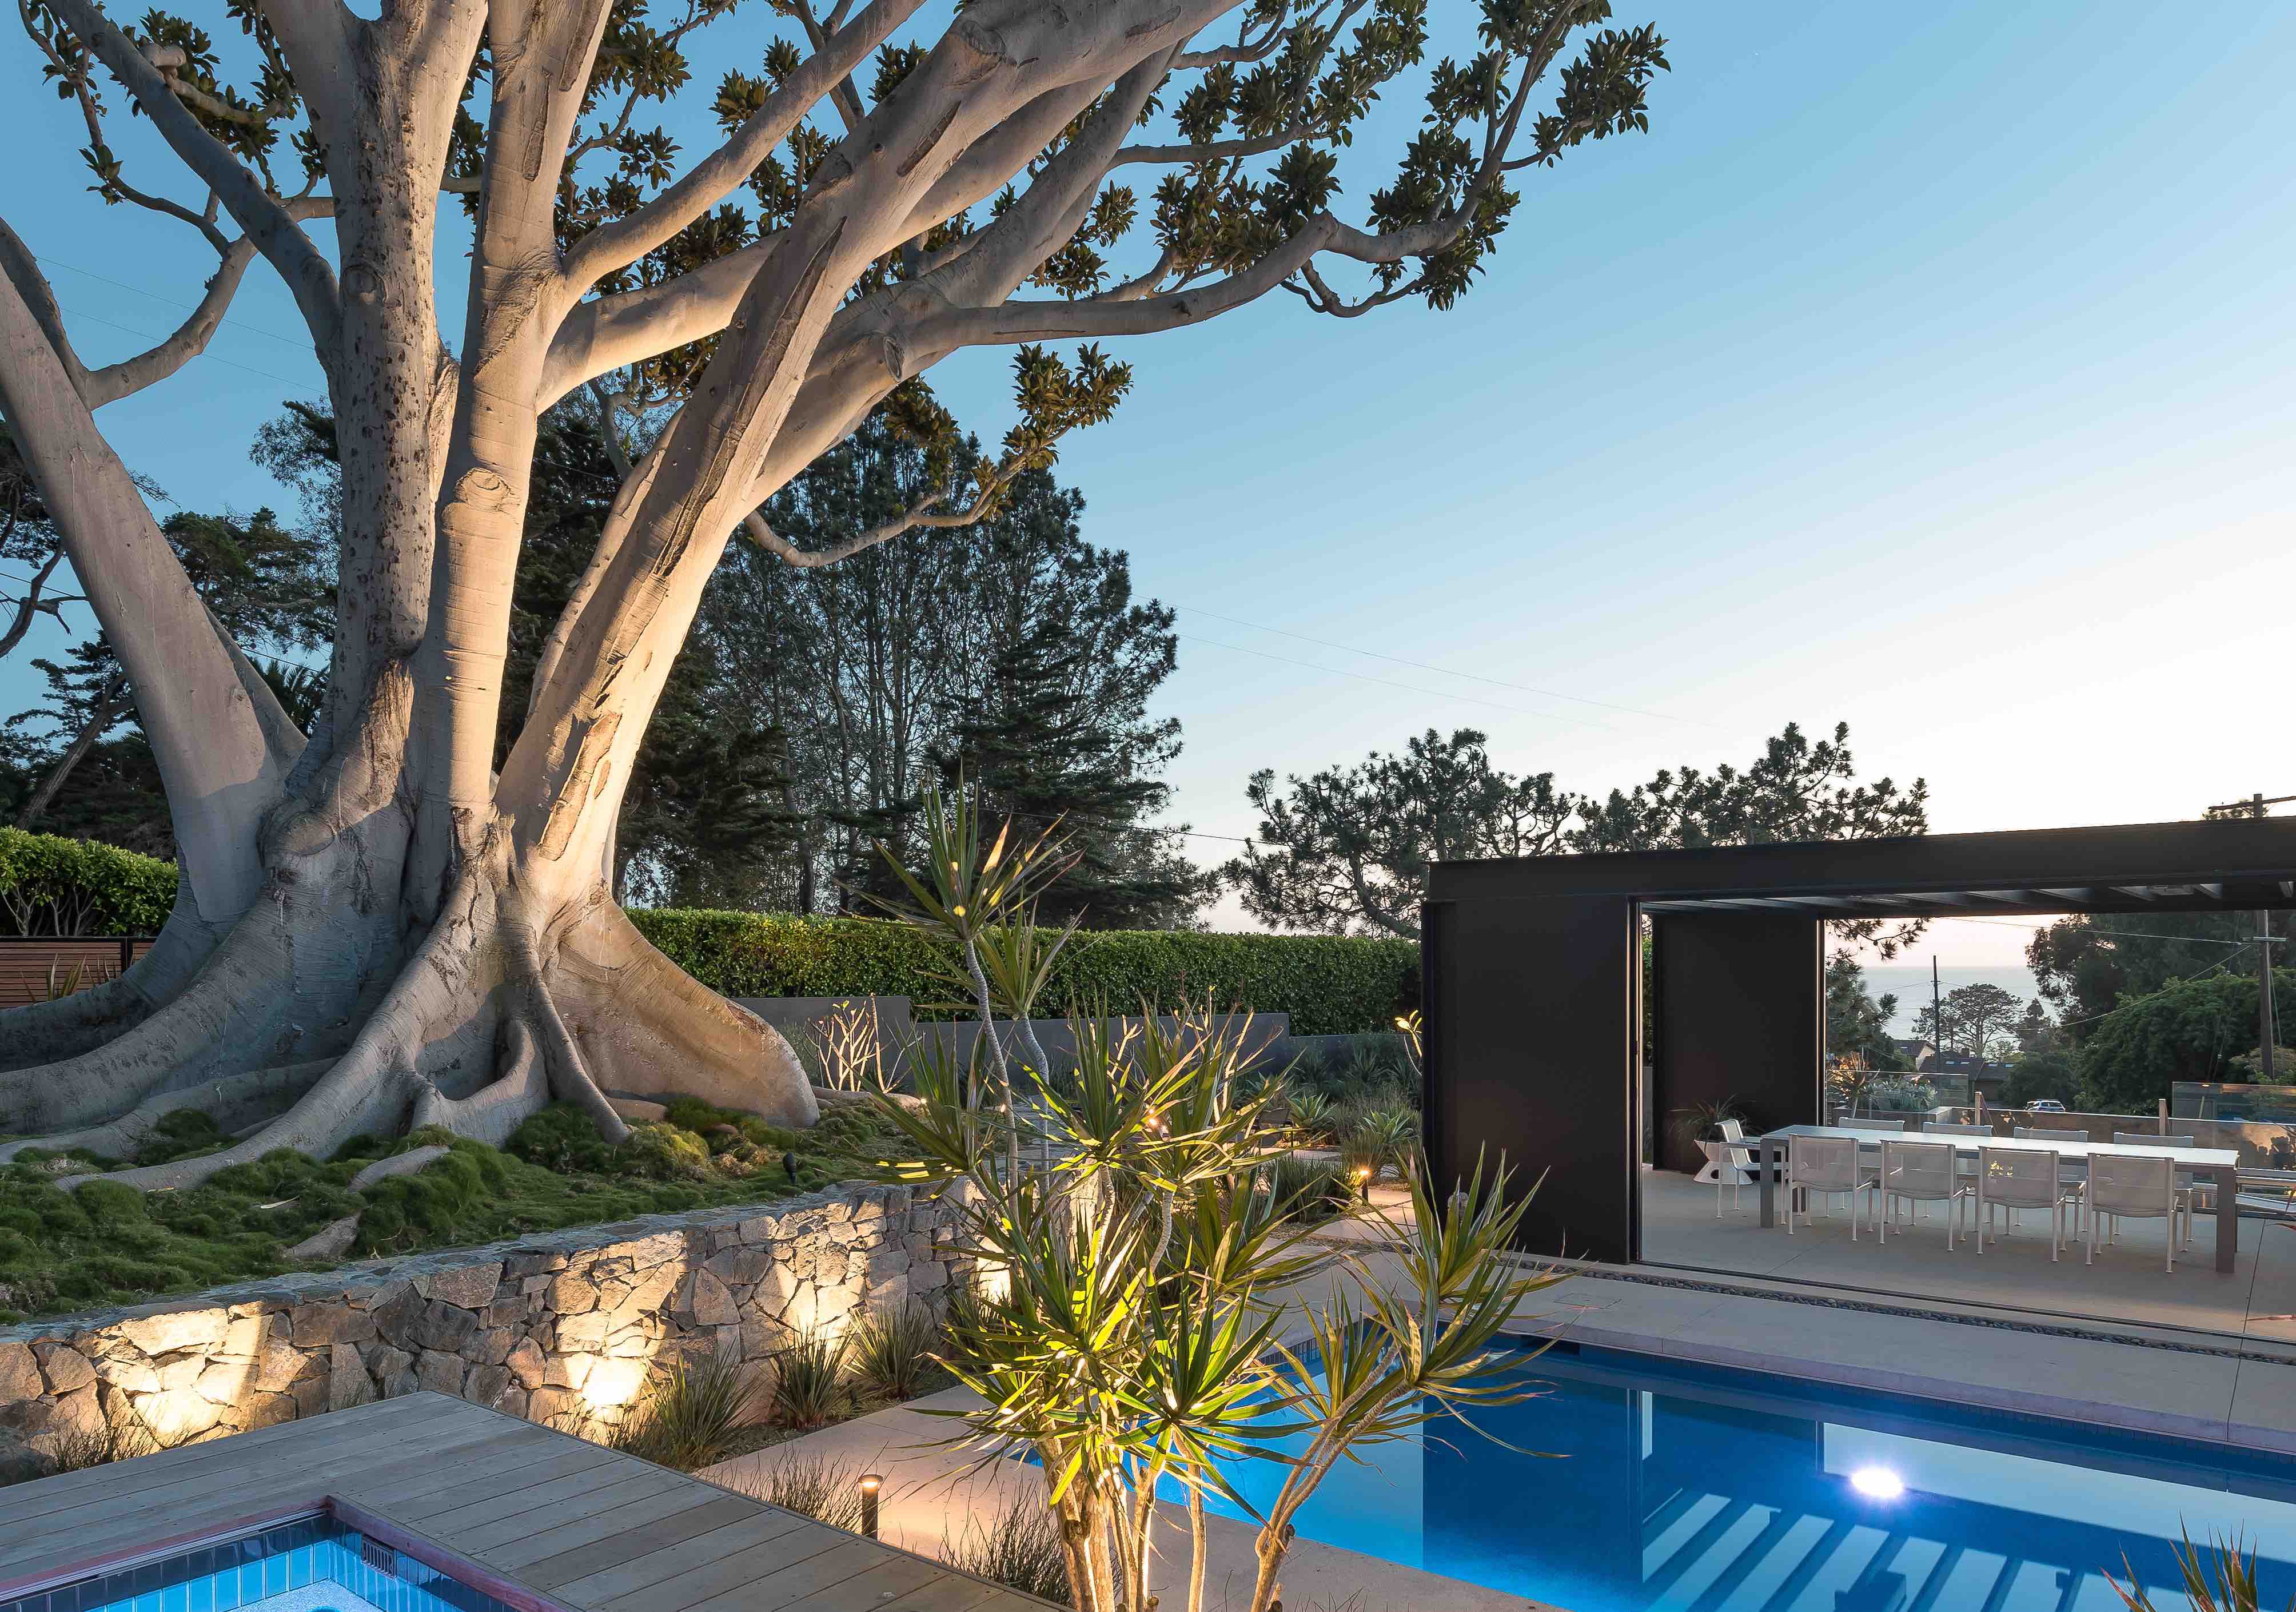 Exterior landscape design with modern pool